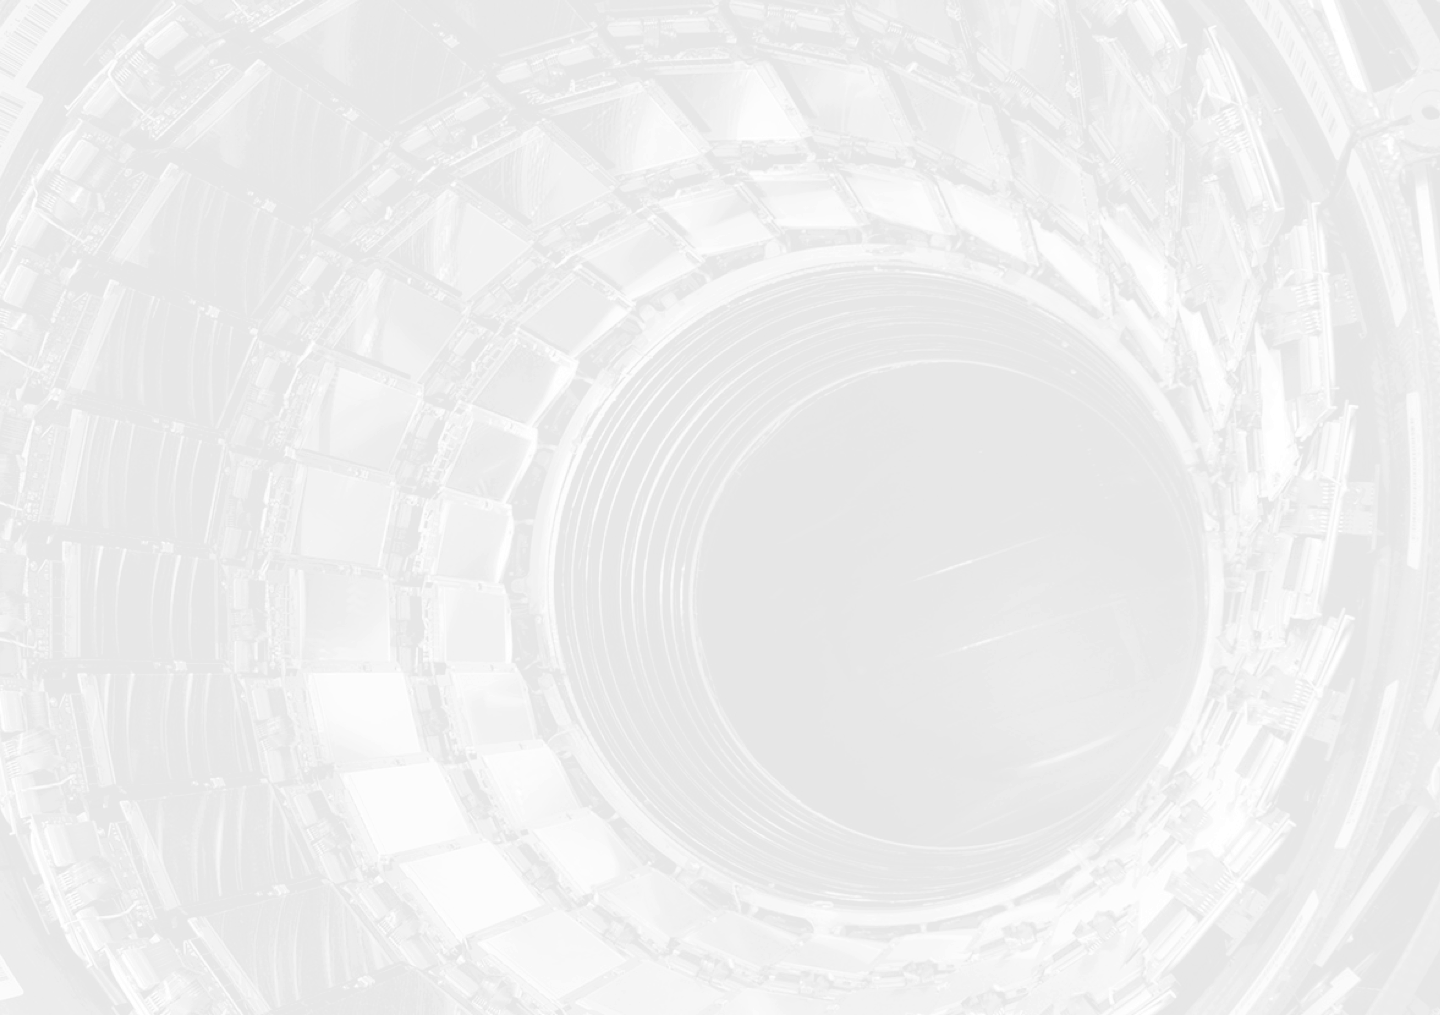 Internal View of Rocket Engine